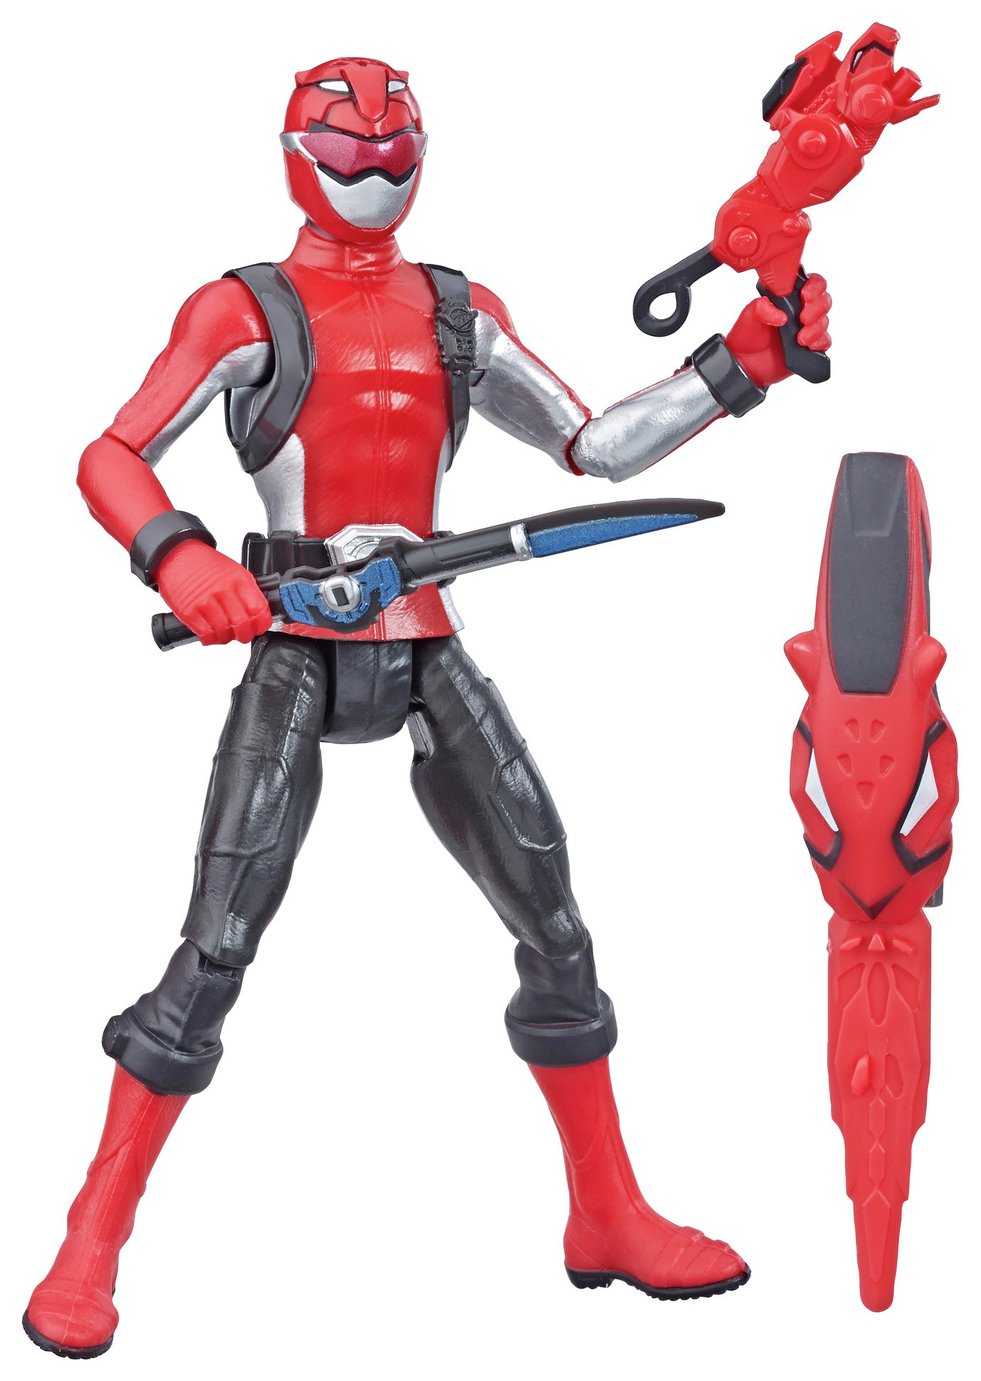 Power Rangers Beast Morphers Red Ranger 6-inch Figure